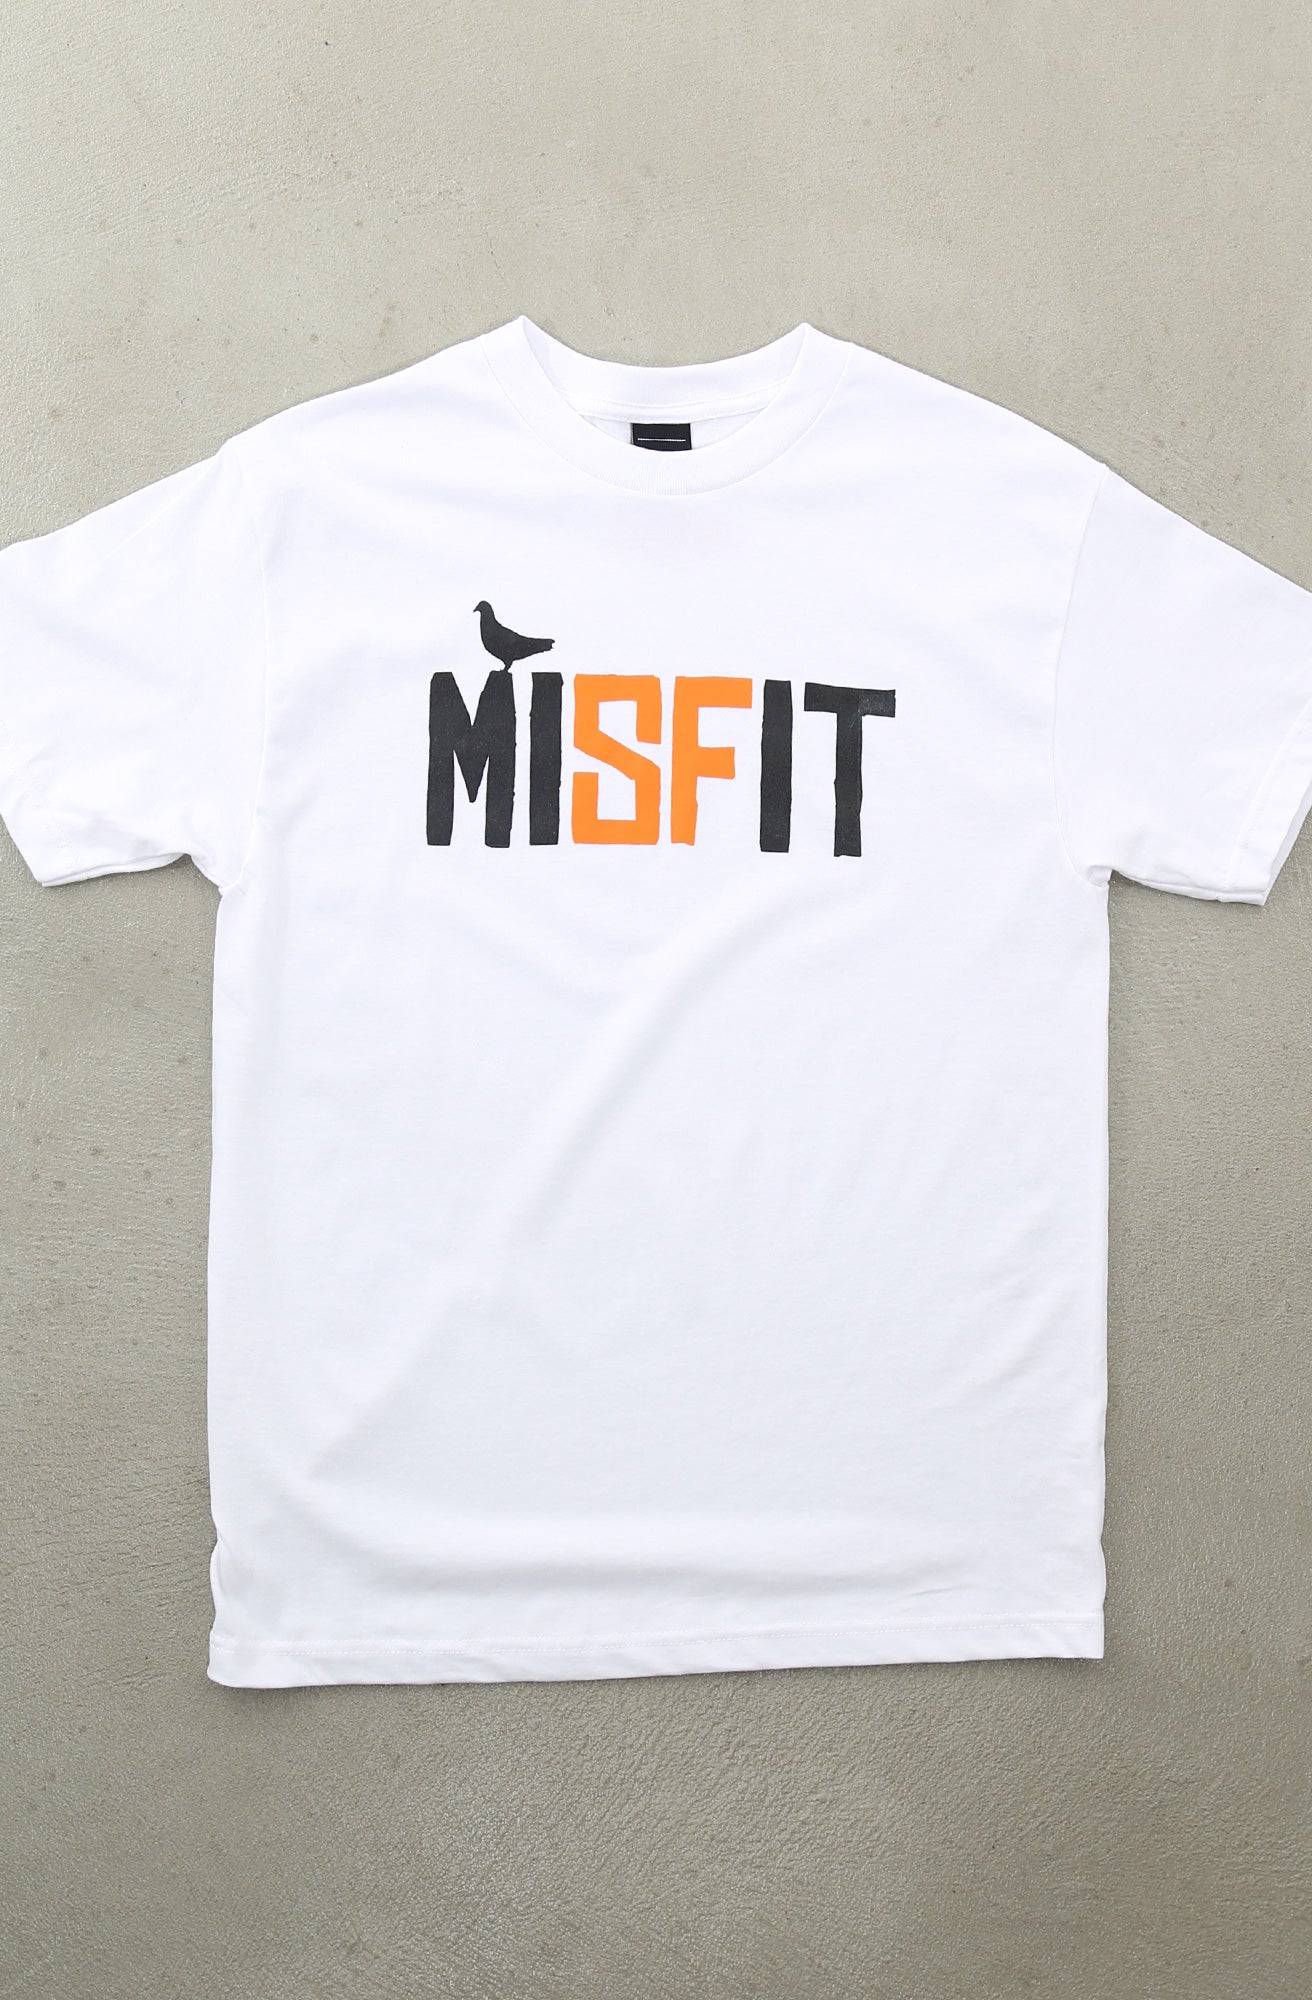 Misfit (Men's White/Orange Tee)